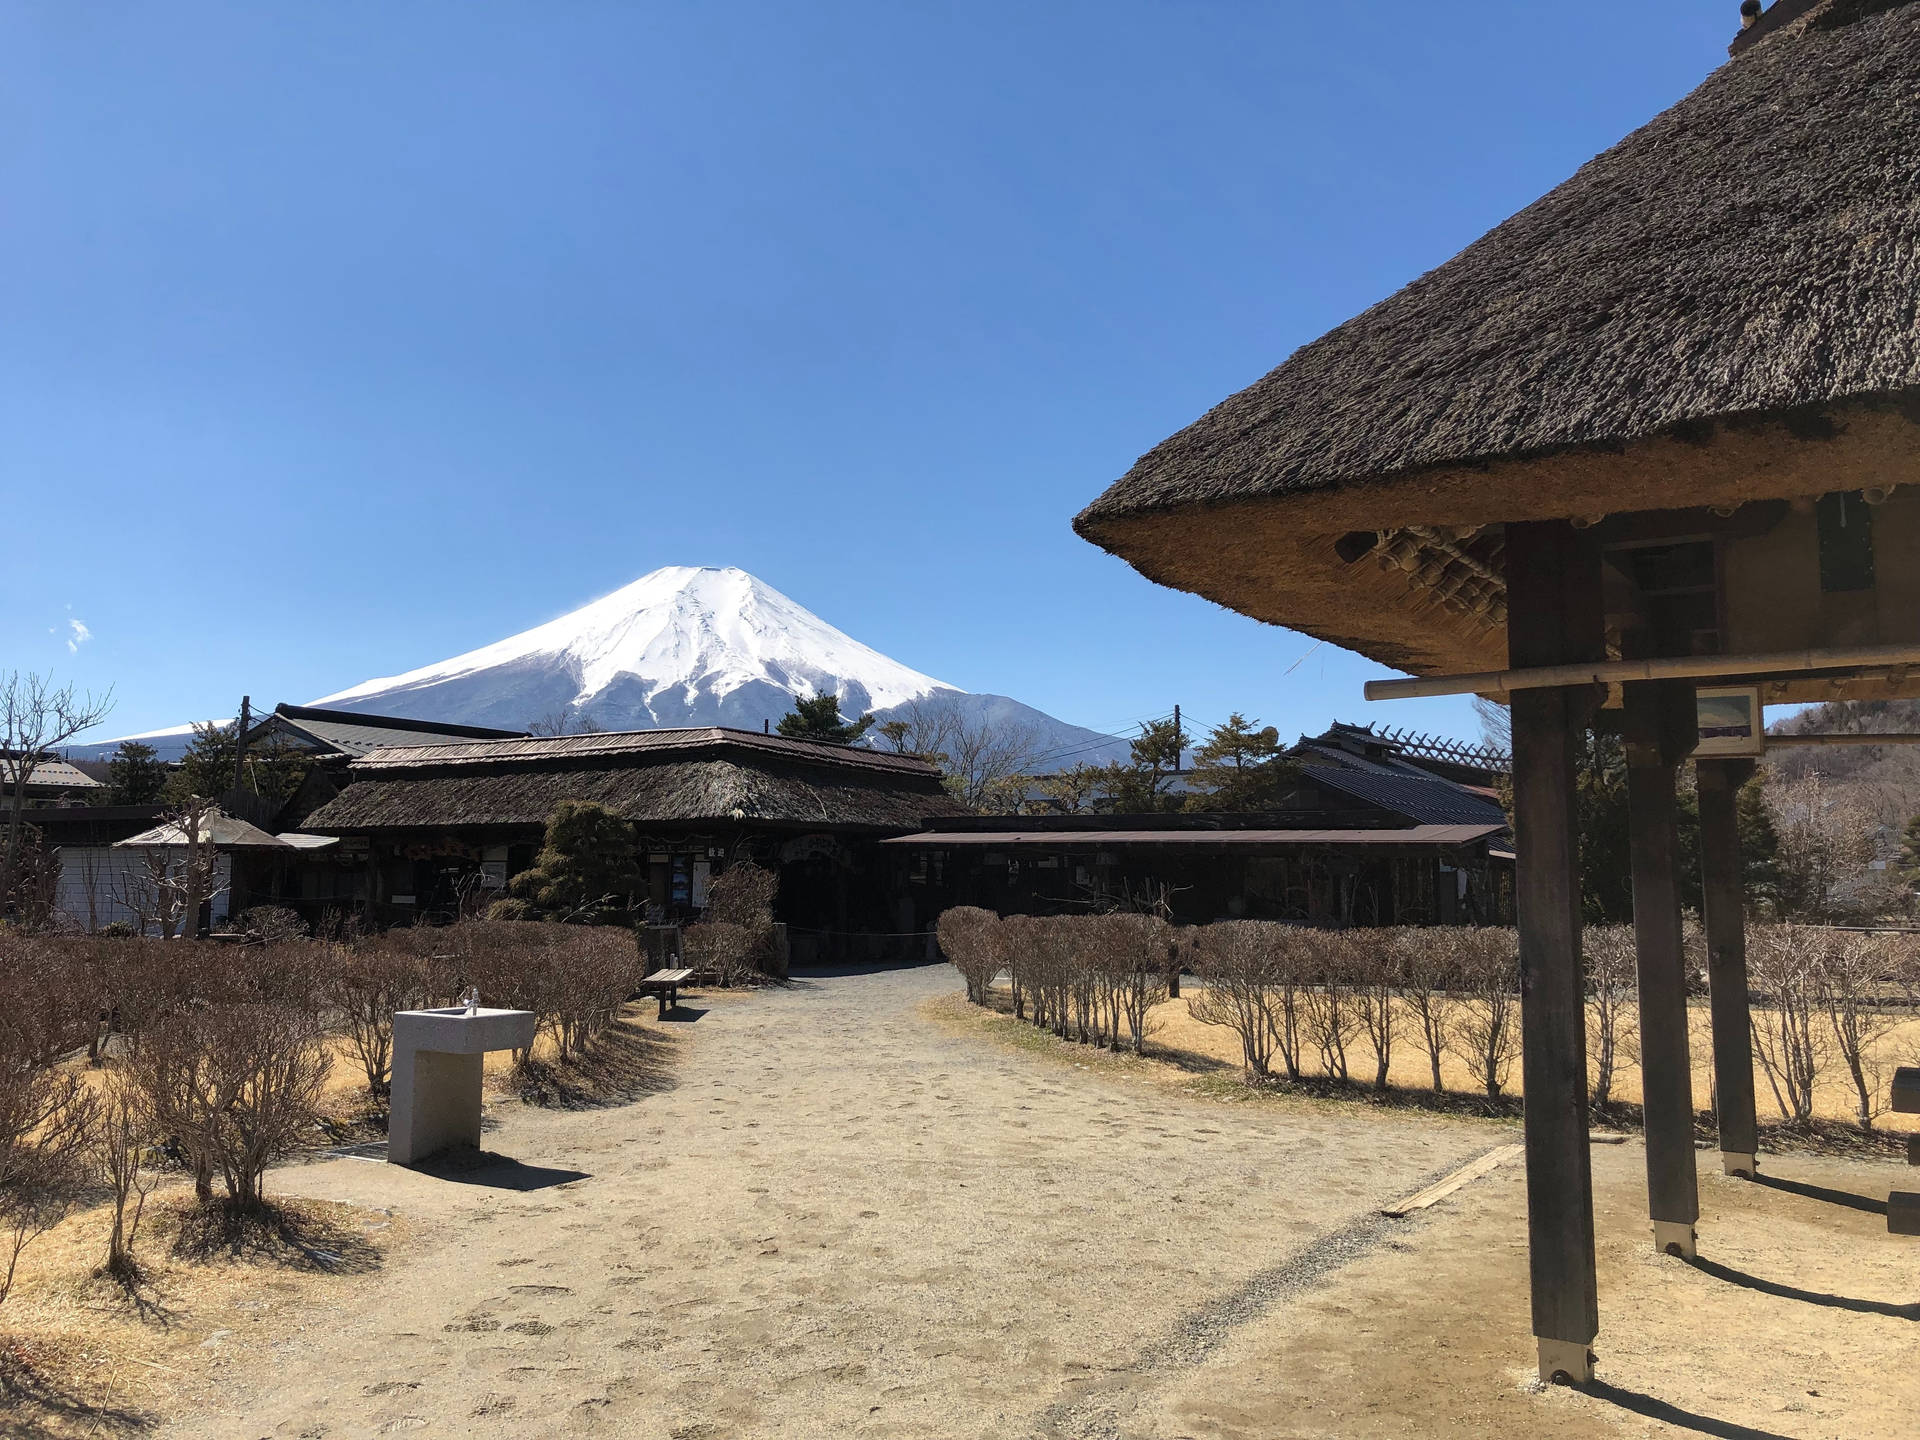 Native Huts And Mount Fuji Wallpaper